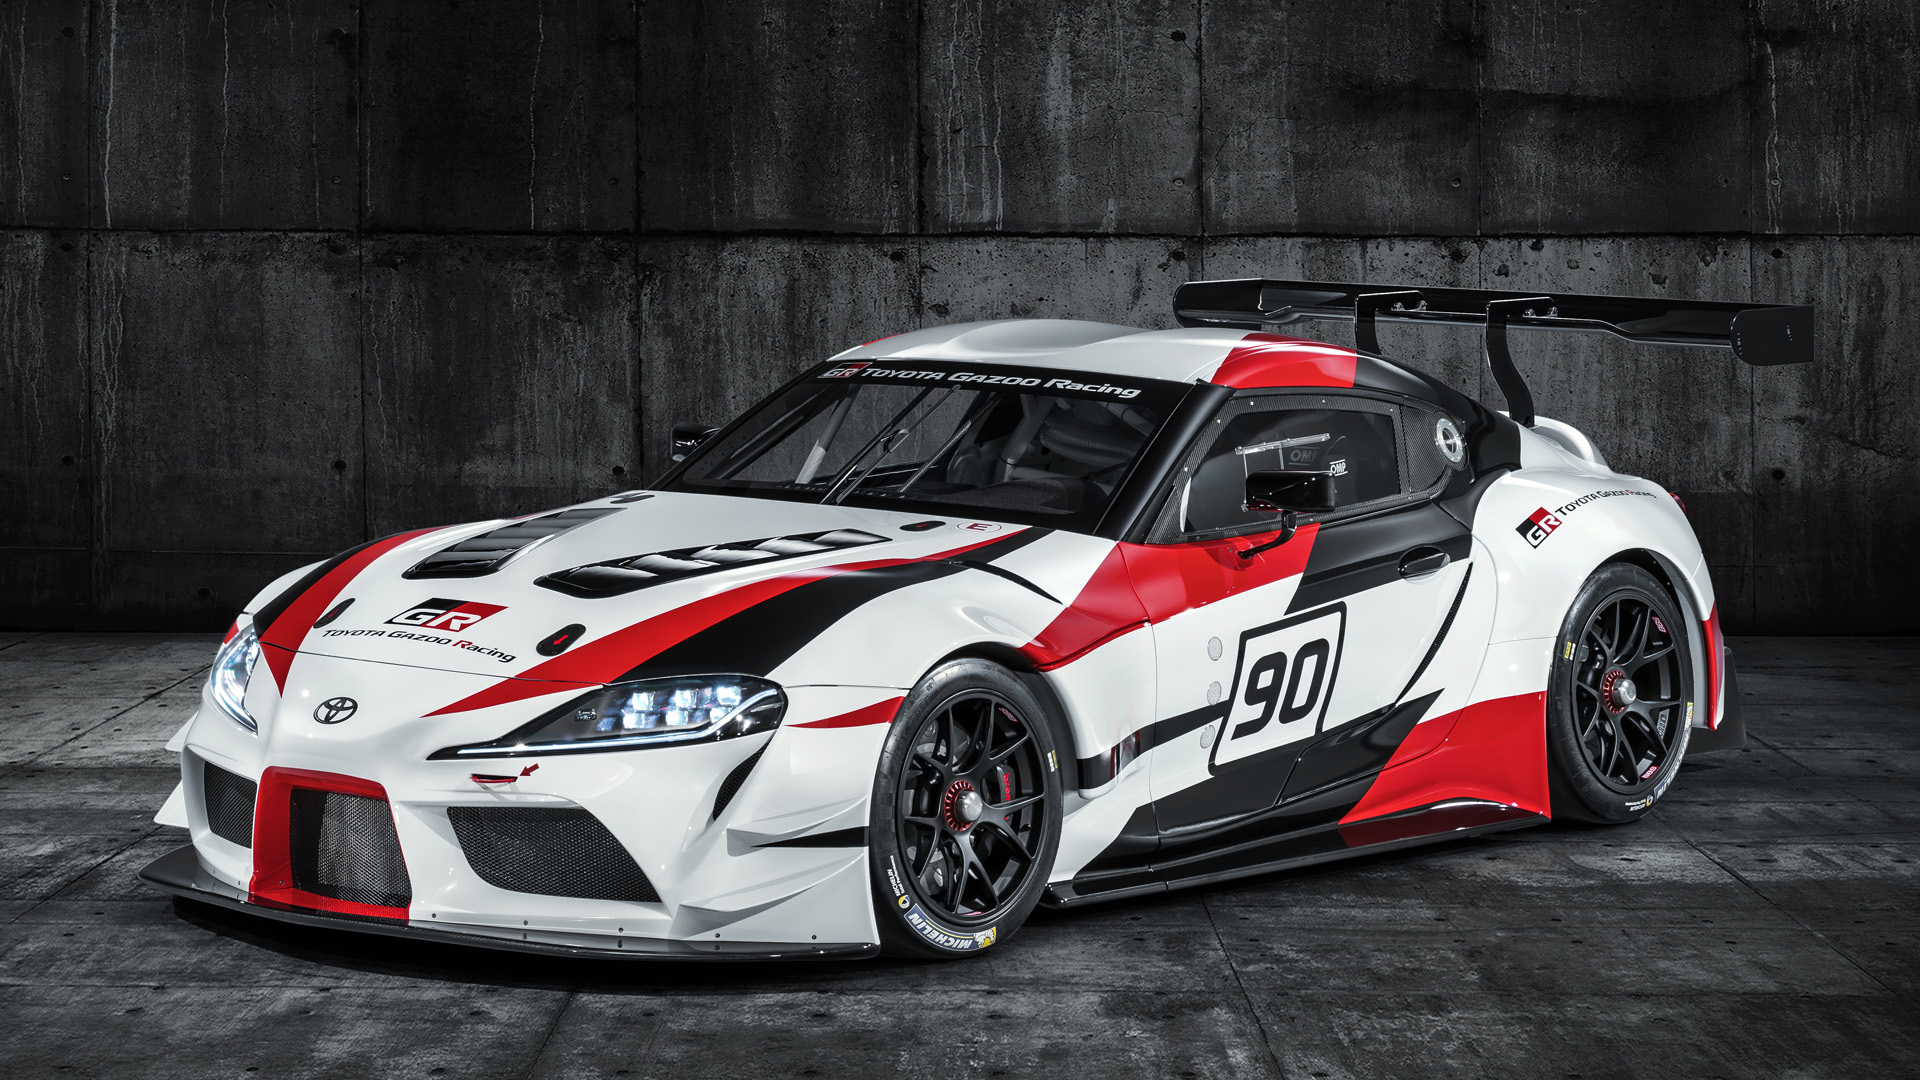 Weltpremiere Des Toyota Gr Supra Racing Concept In Kürze Bei Gran